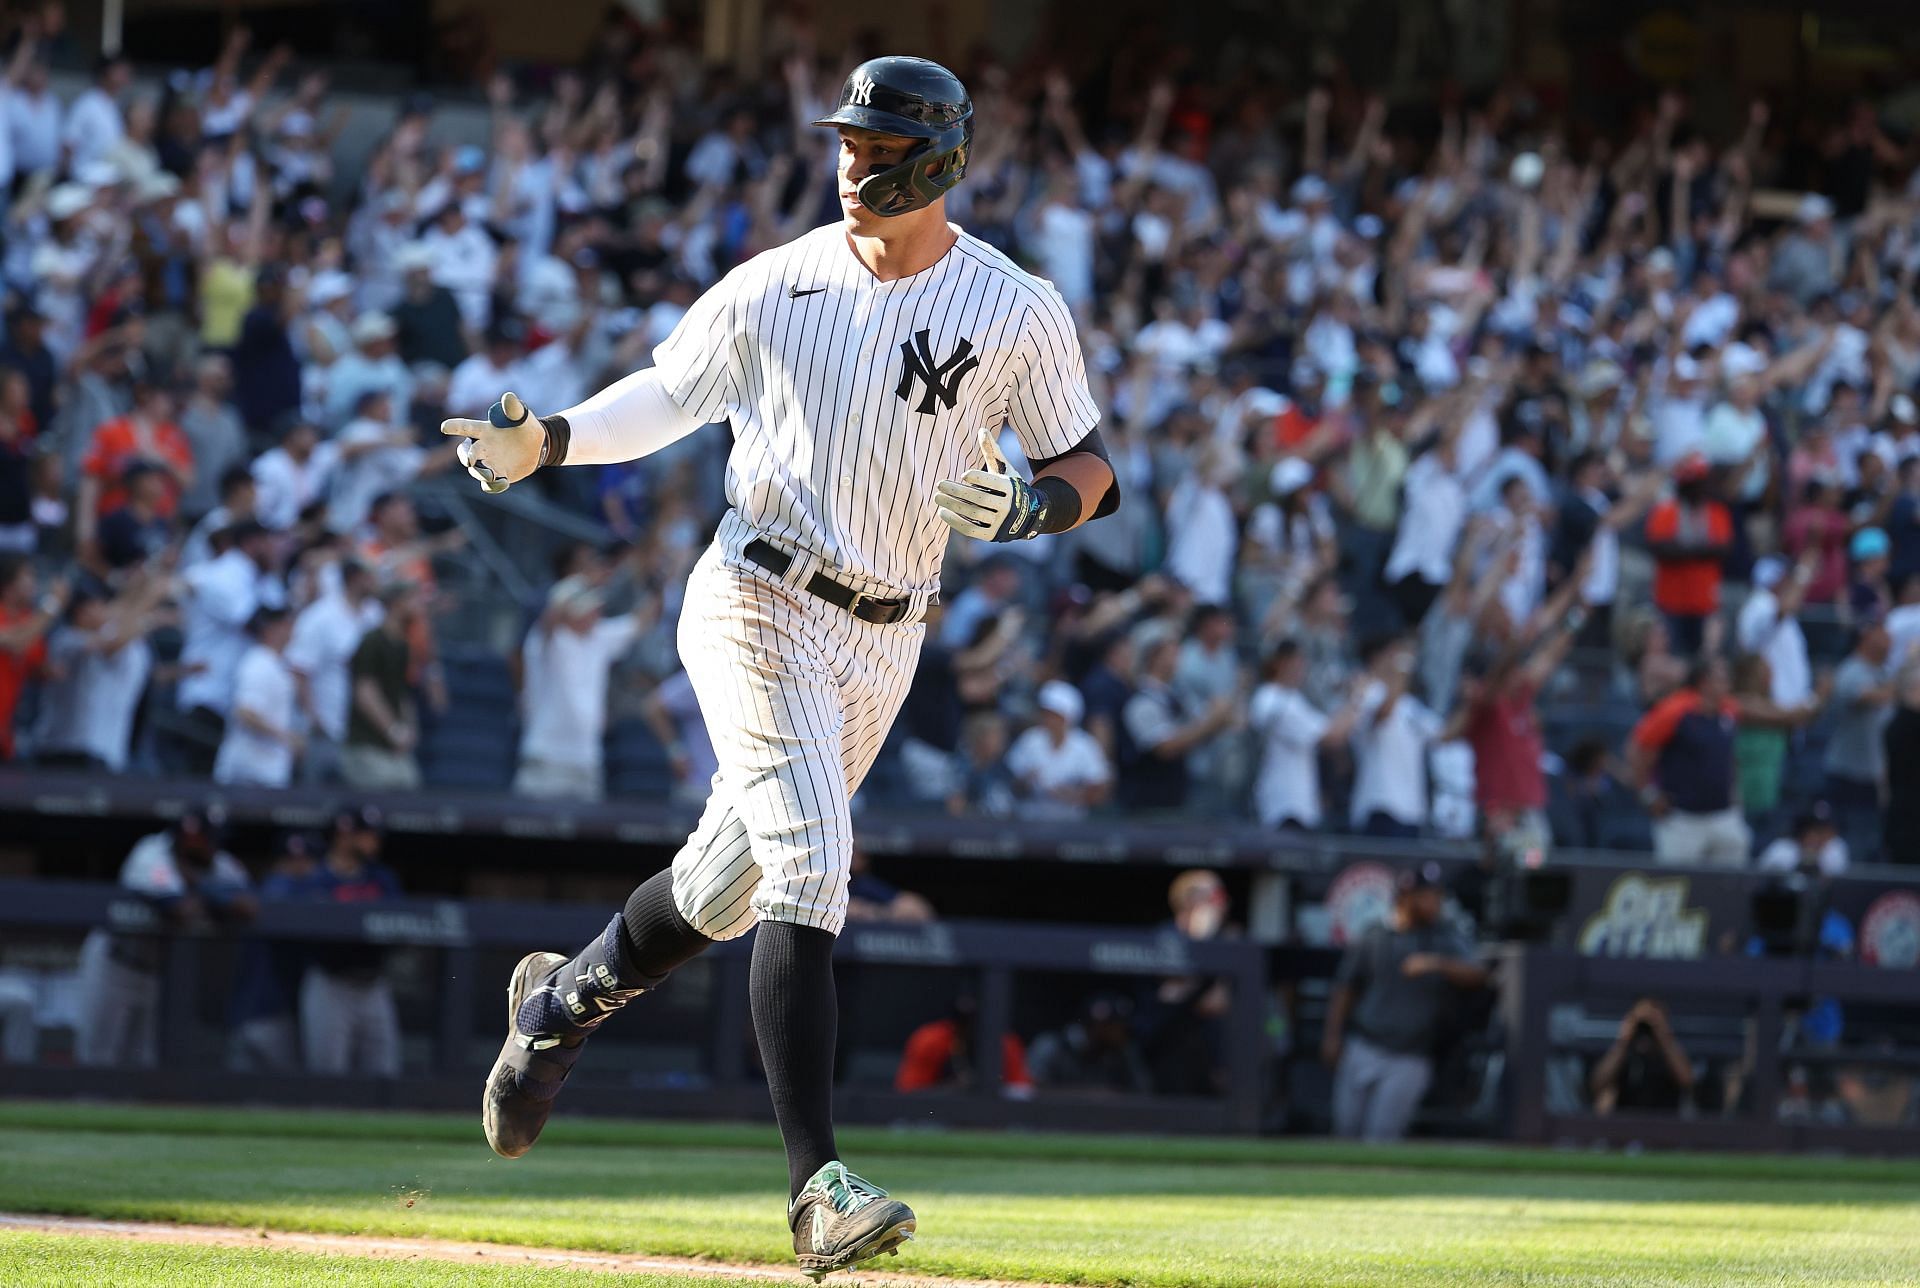 New York Yankees slugger Aaron Judge has hit 29 home runs this season.